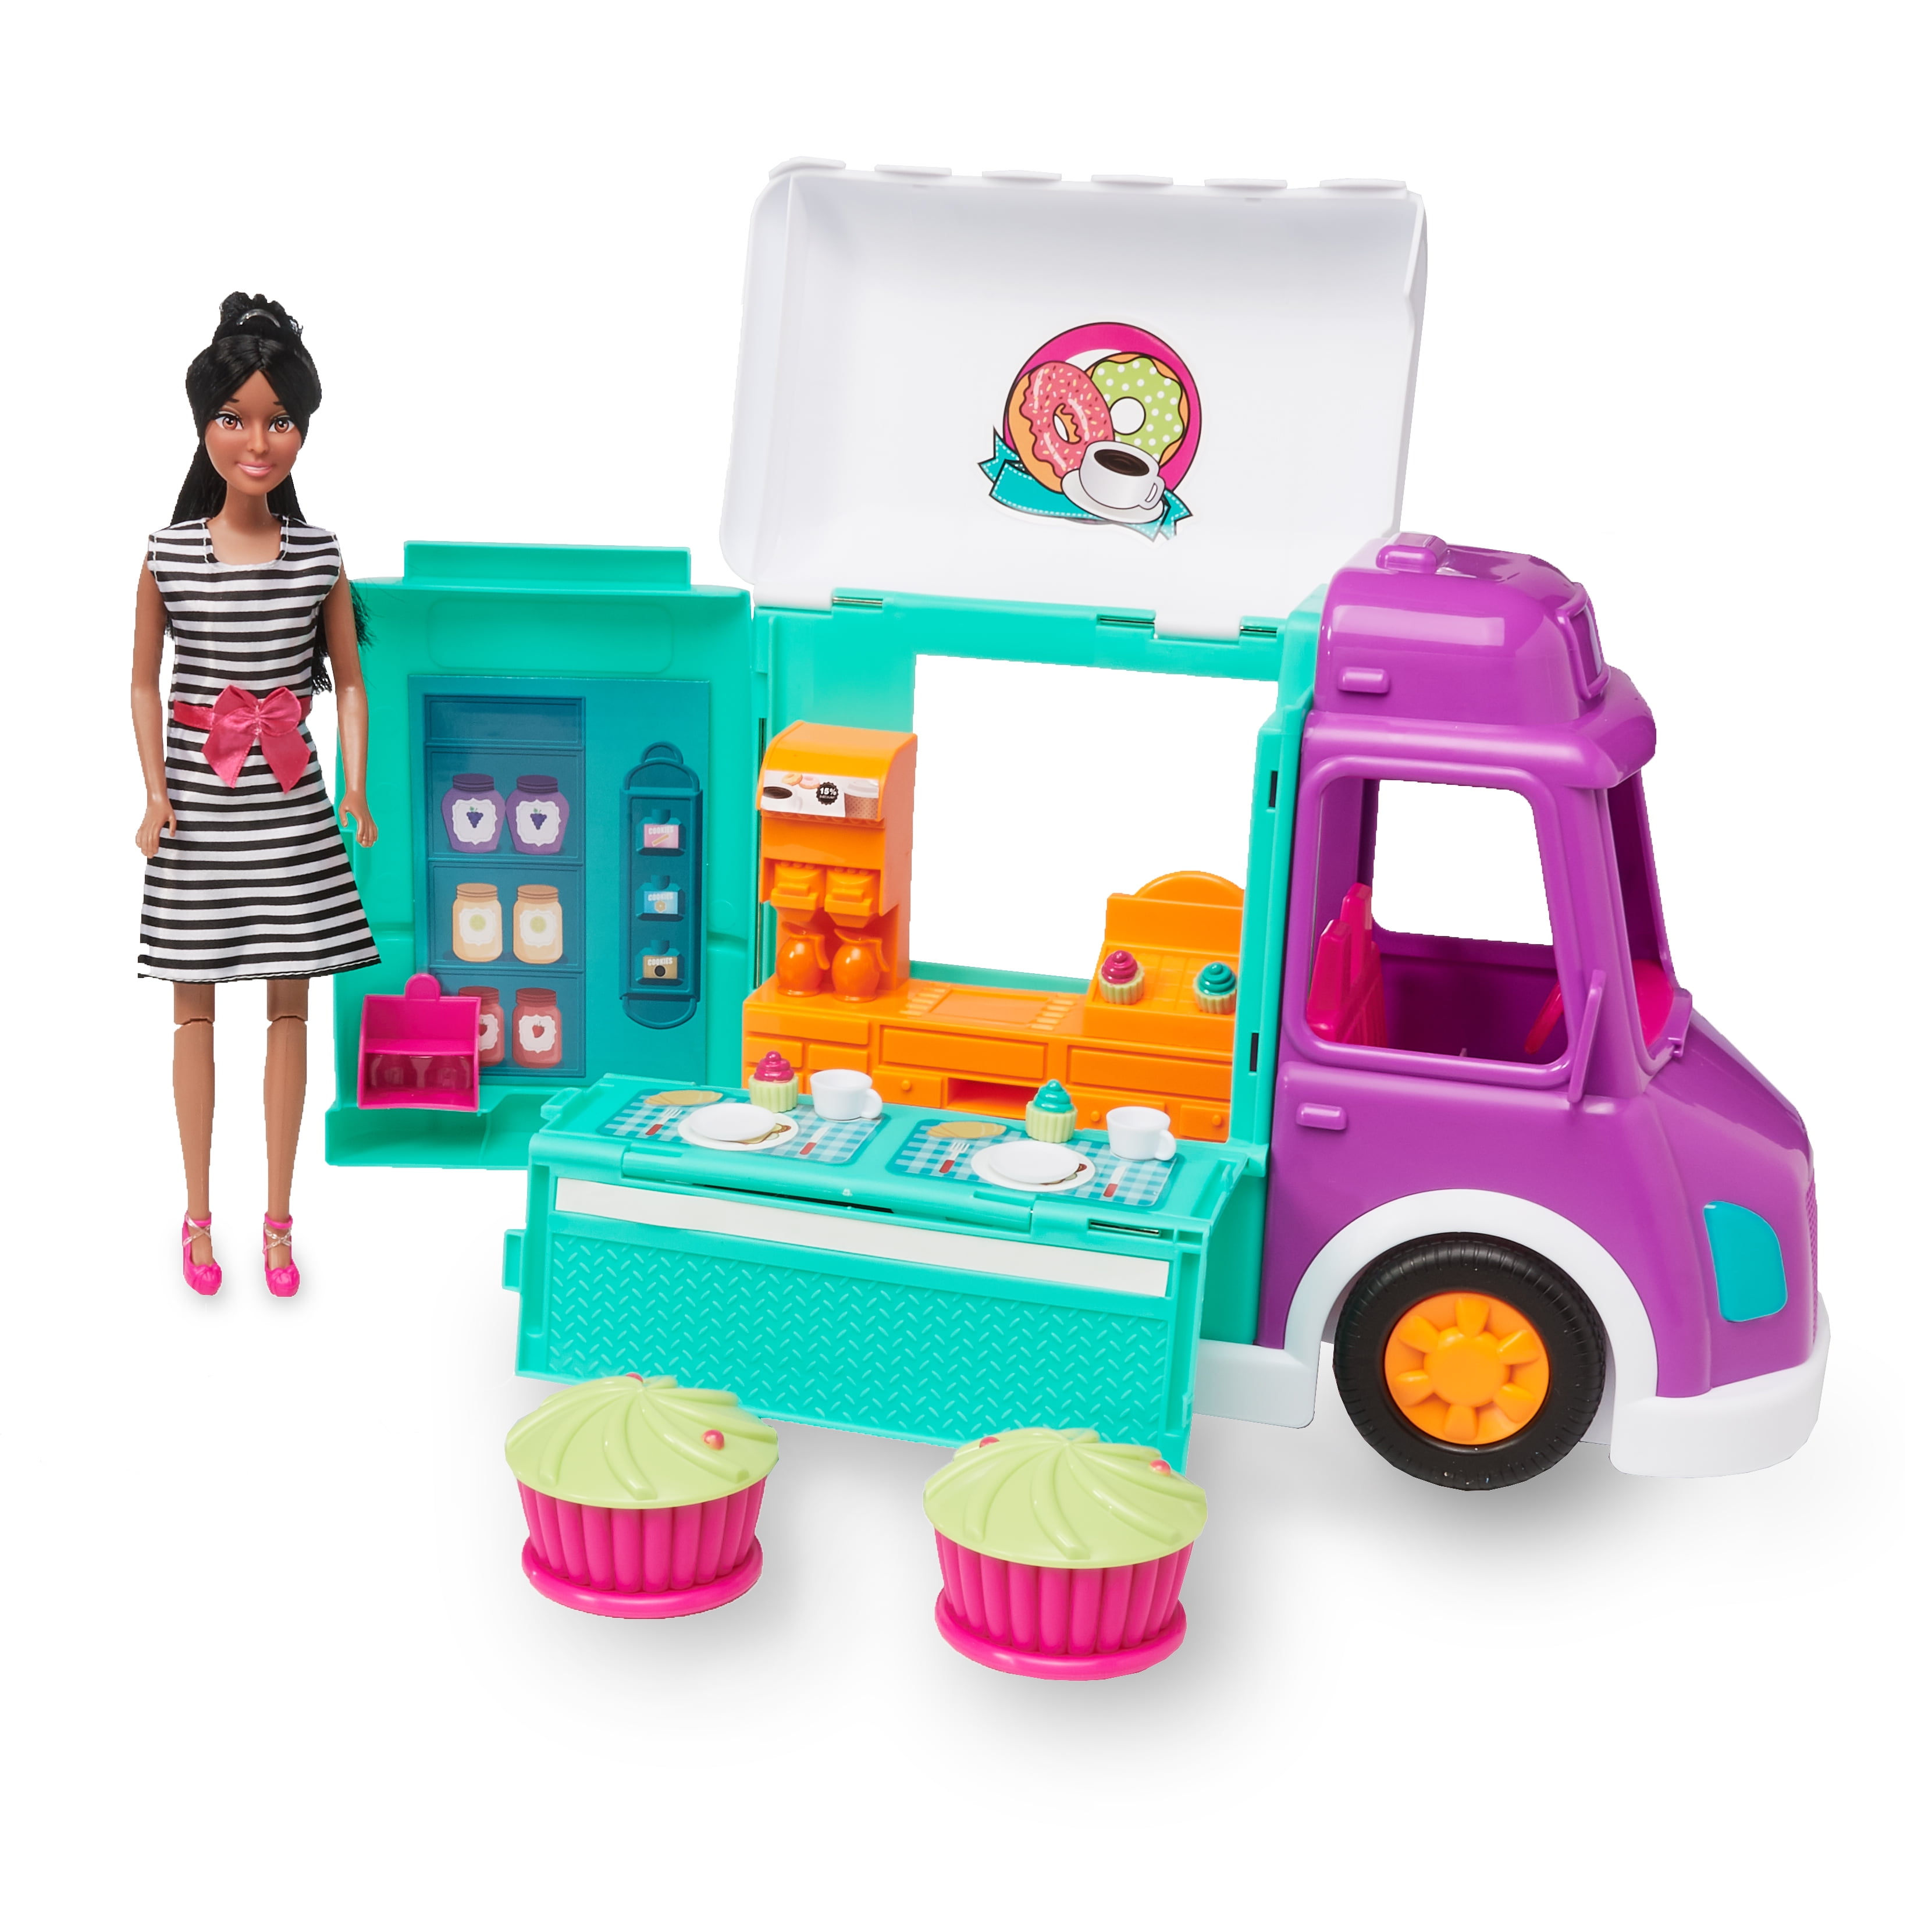 walmart barbie food truck